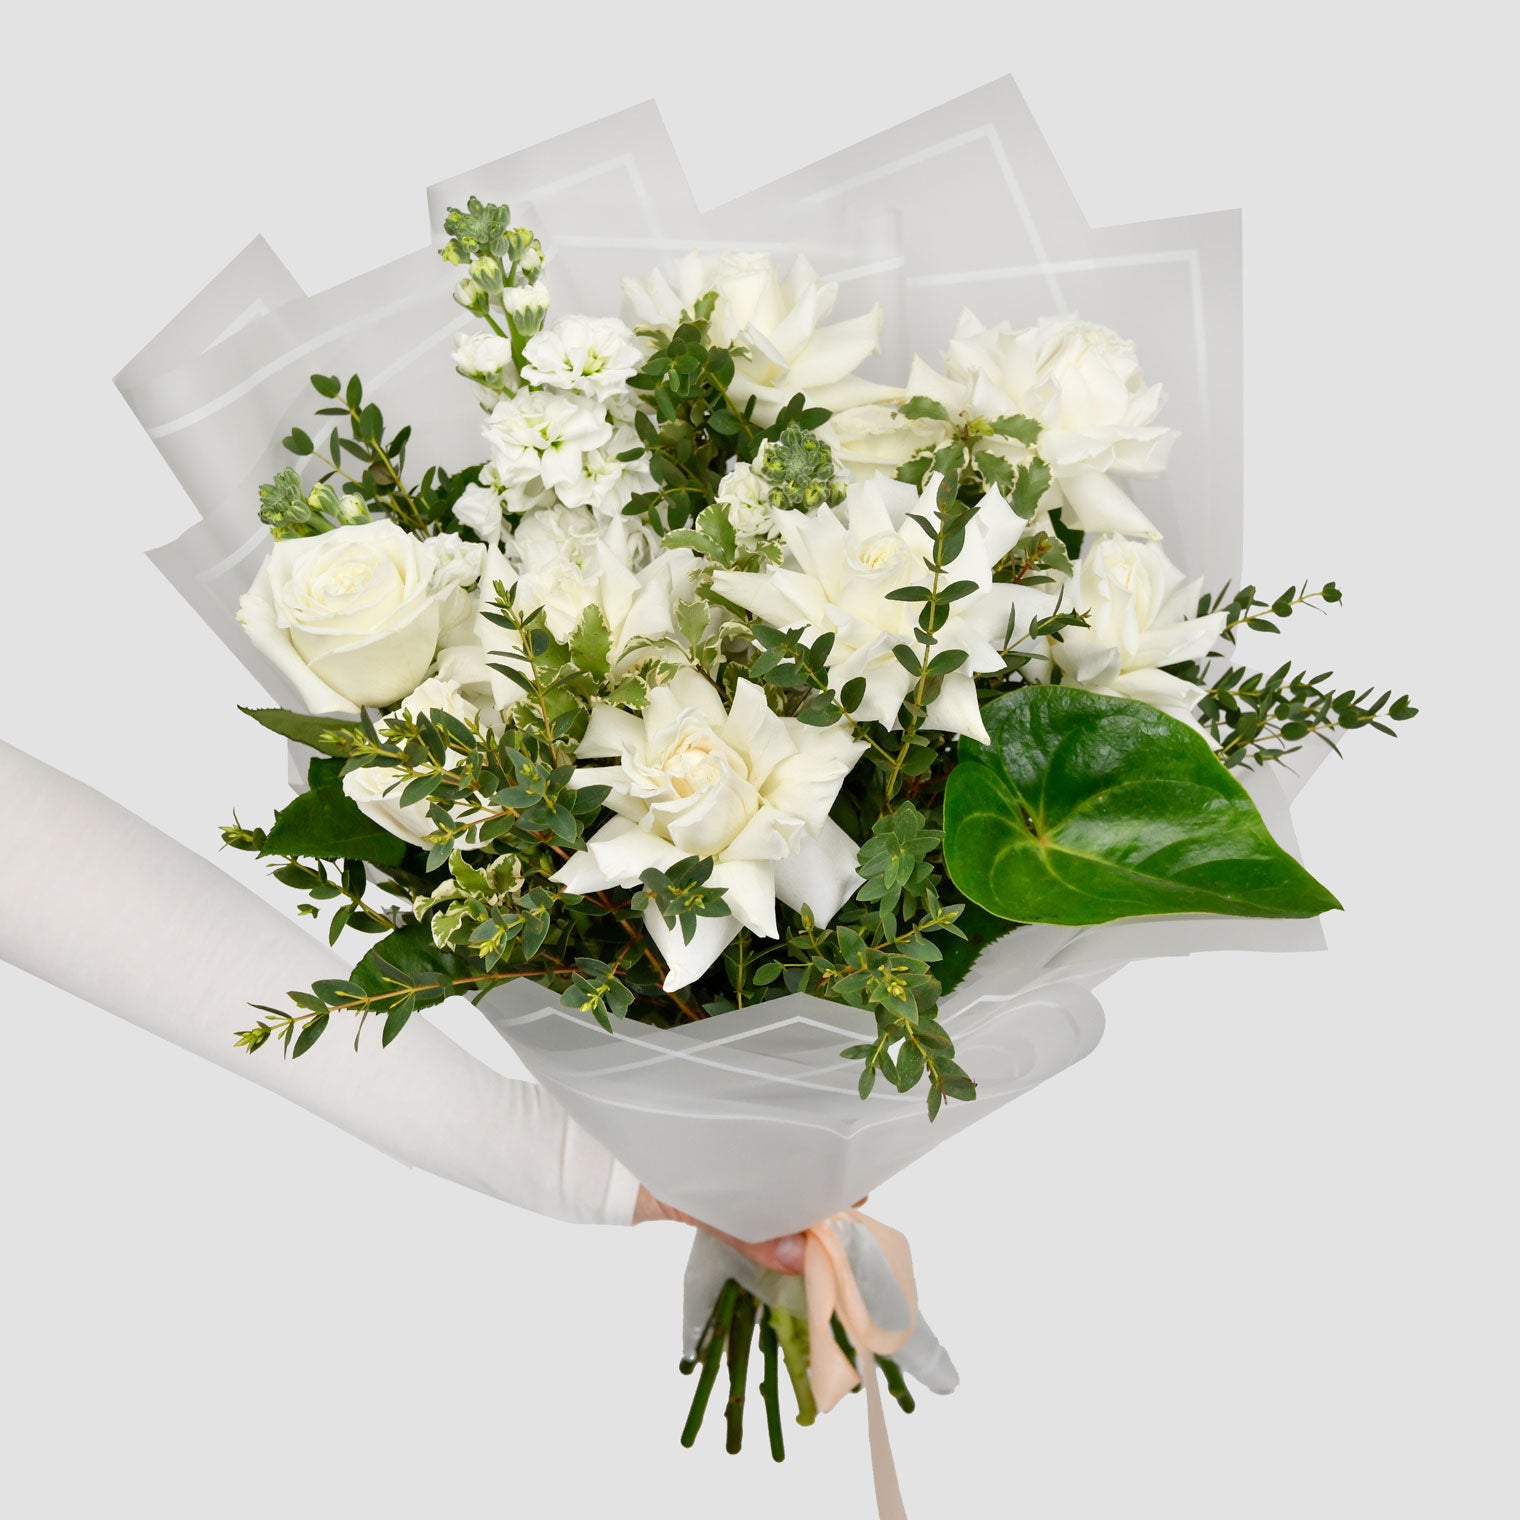 Buchet trandafiri speciali albi si antirrhinum, 1Buchet trandafiri speciali albi si antirrhinum, 1